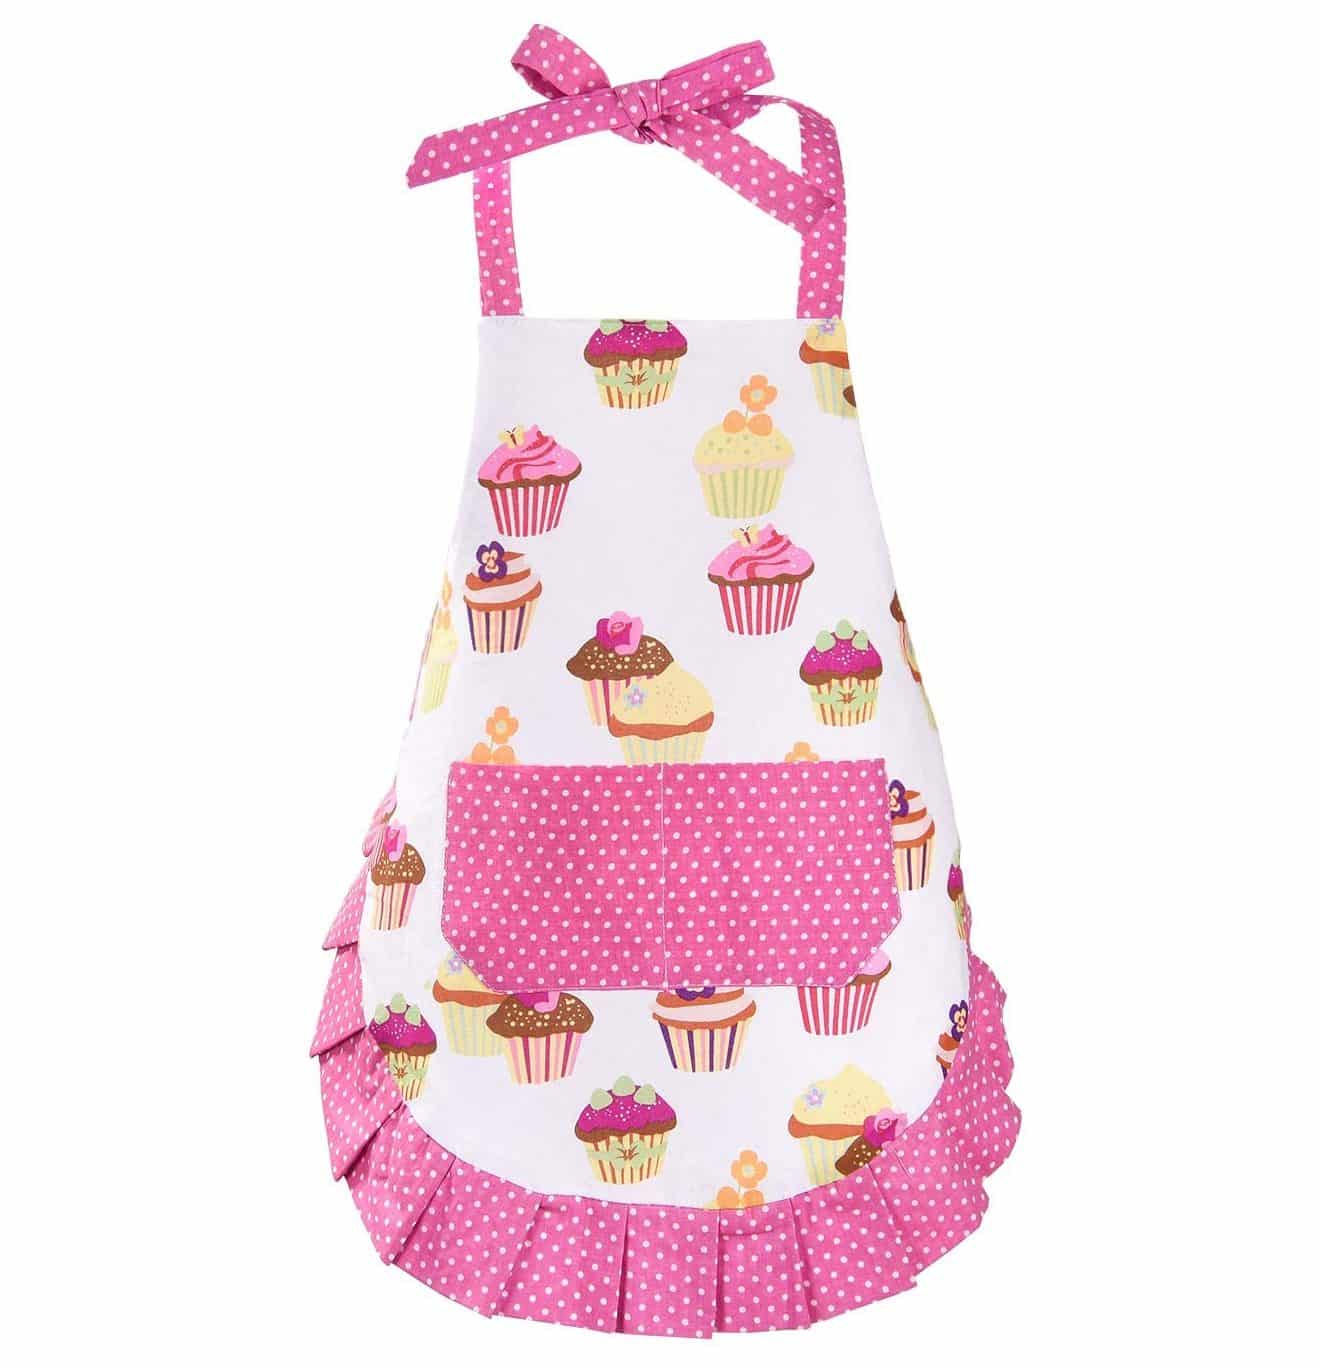 stocking-stuffer-ideas-for-kids-apron